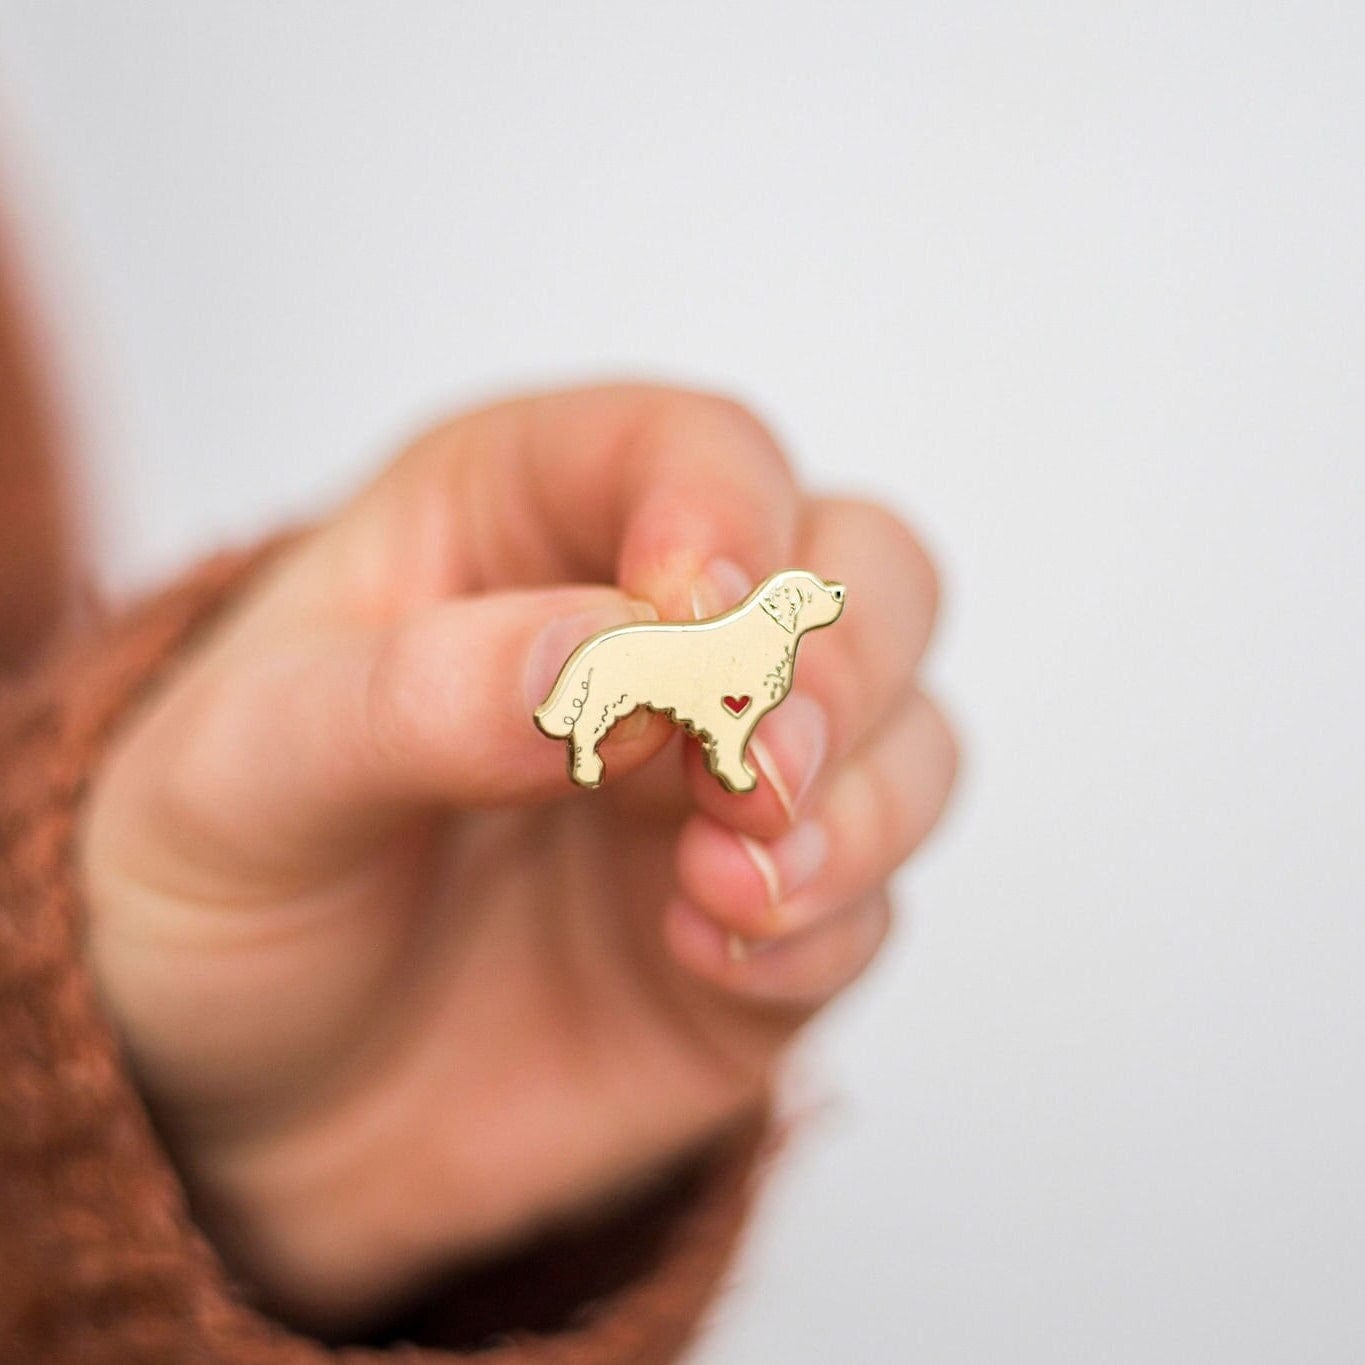 Golden Retriever Dog Enamel Pin Badge - Perfect Gift For Lovers